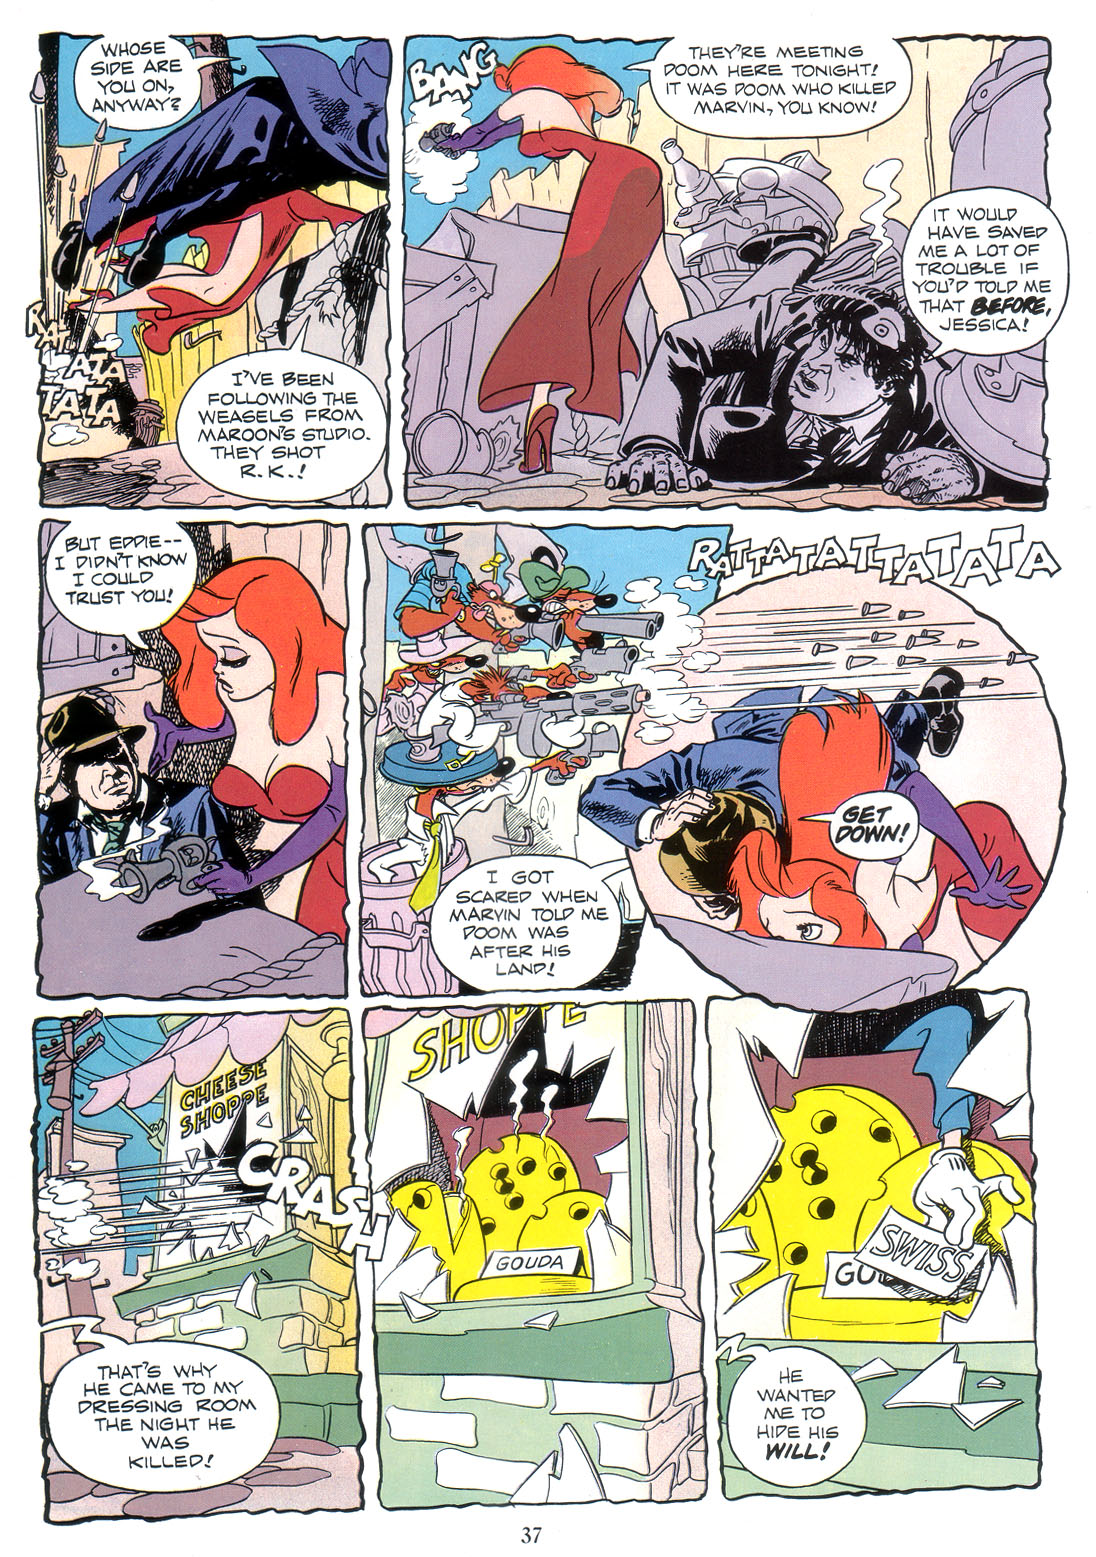 Marvel Graphic Novel issue 41 - Who Framed Roger Rabbit - Page 39